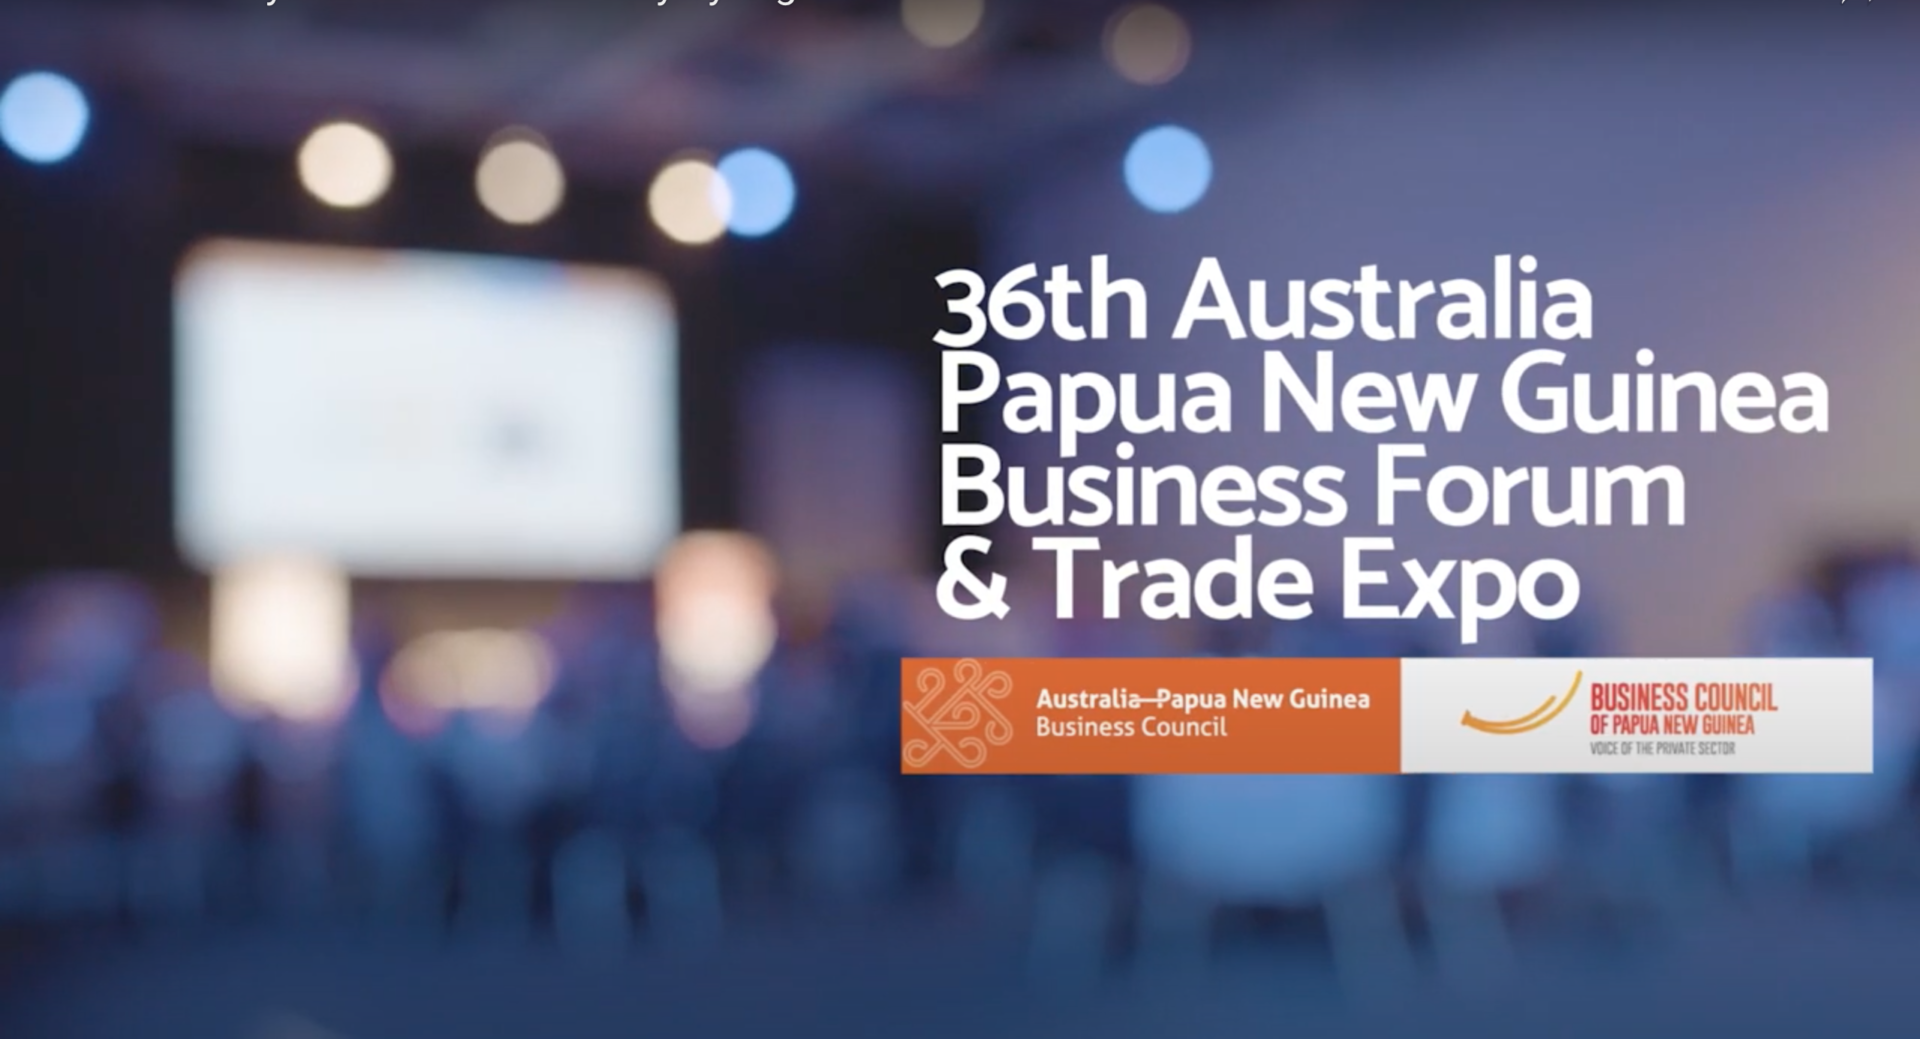 The Australia Papua New Guinea Business Council Event